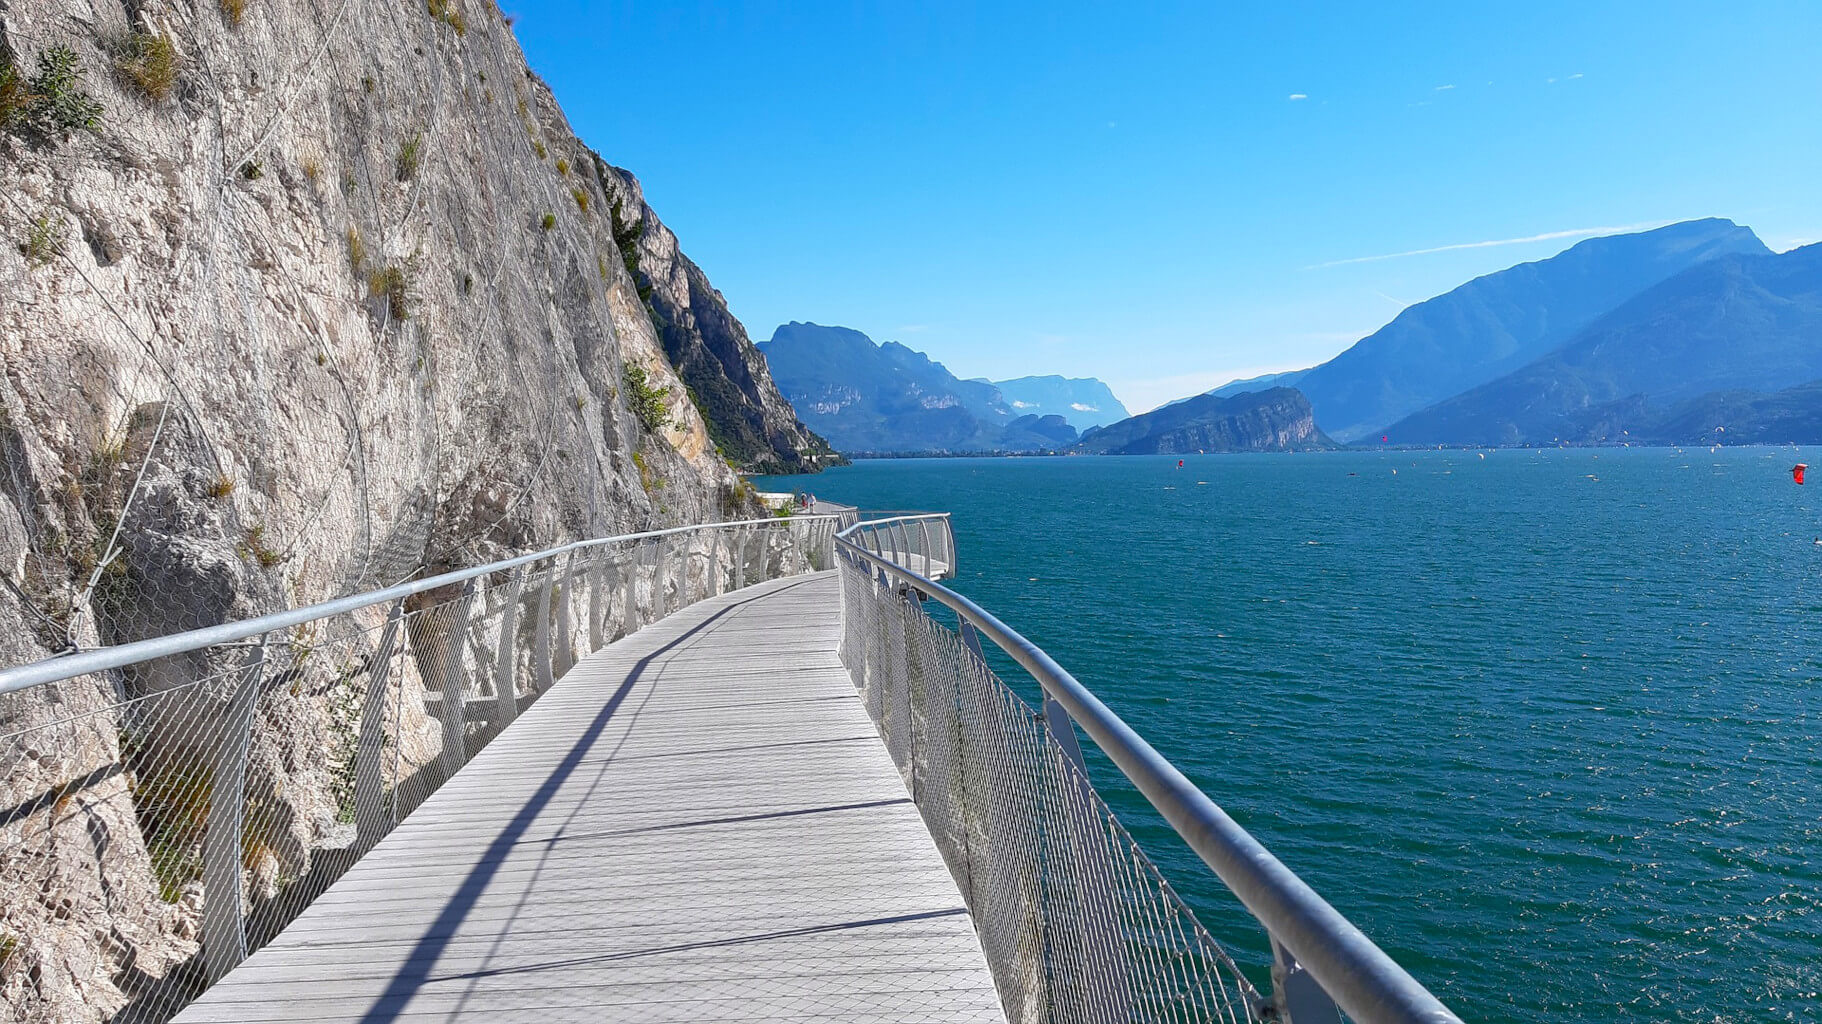 Cycle paths on Lake Garda